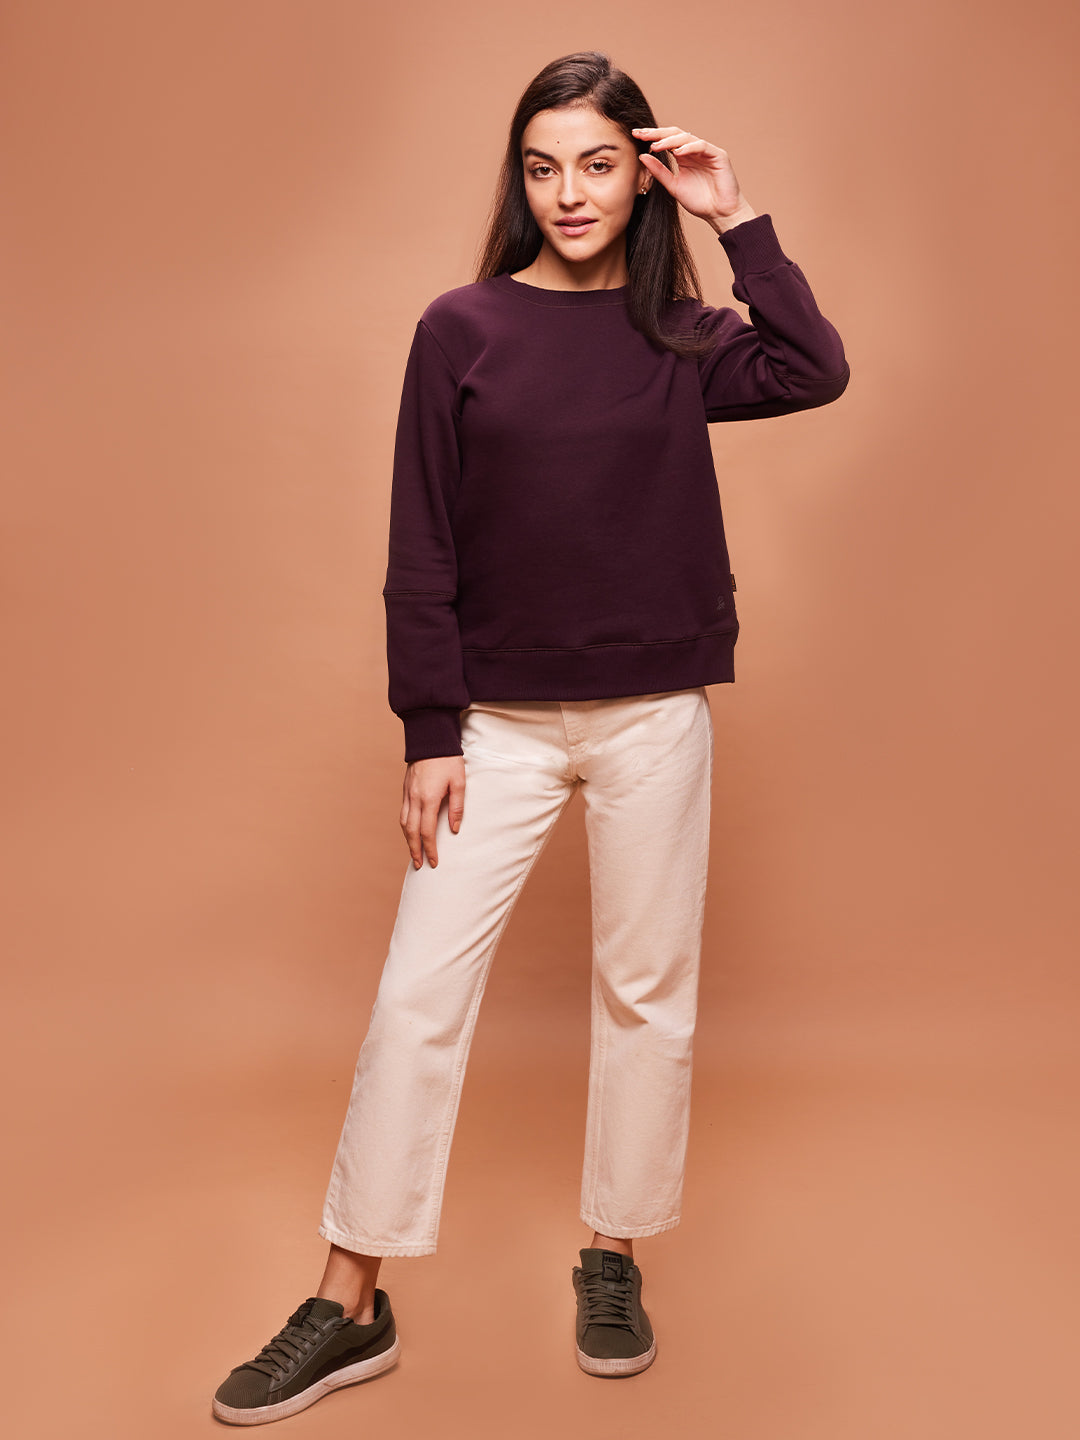 Bombay High Women's Maroon Premium Cotton Blend  Solid Knit Sweatshirt